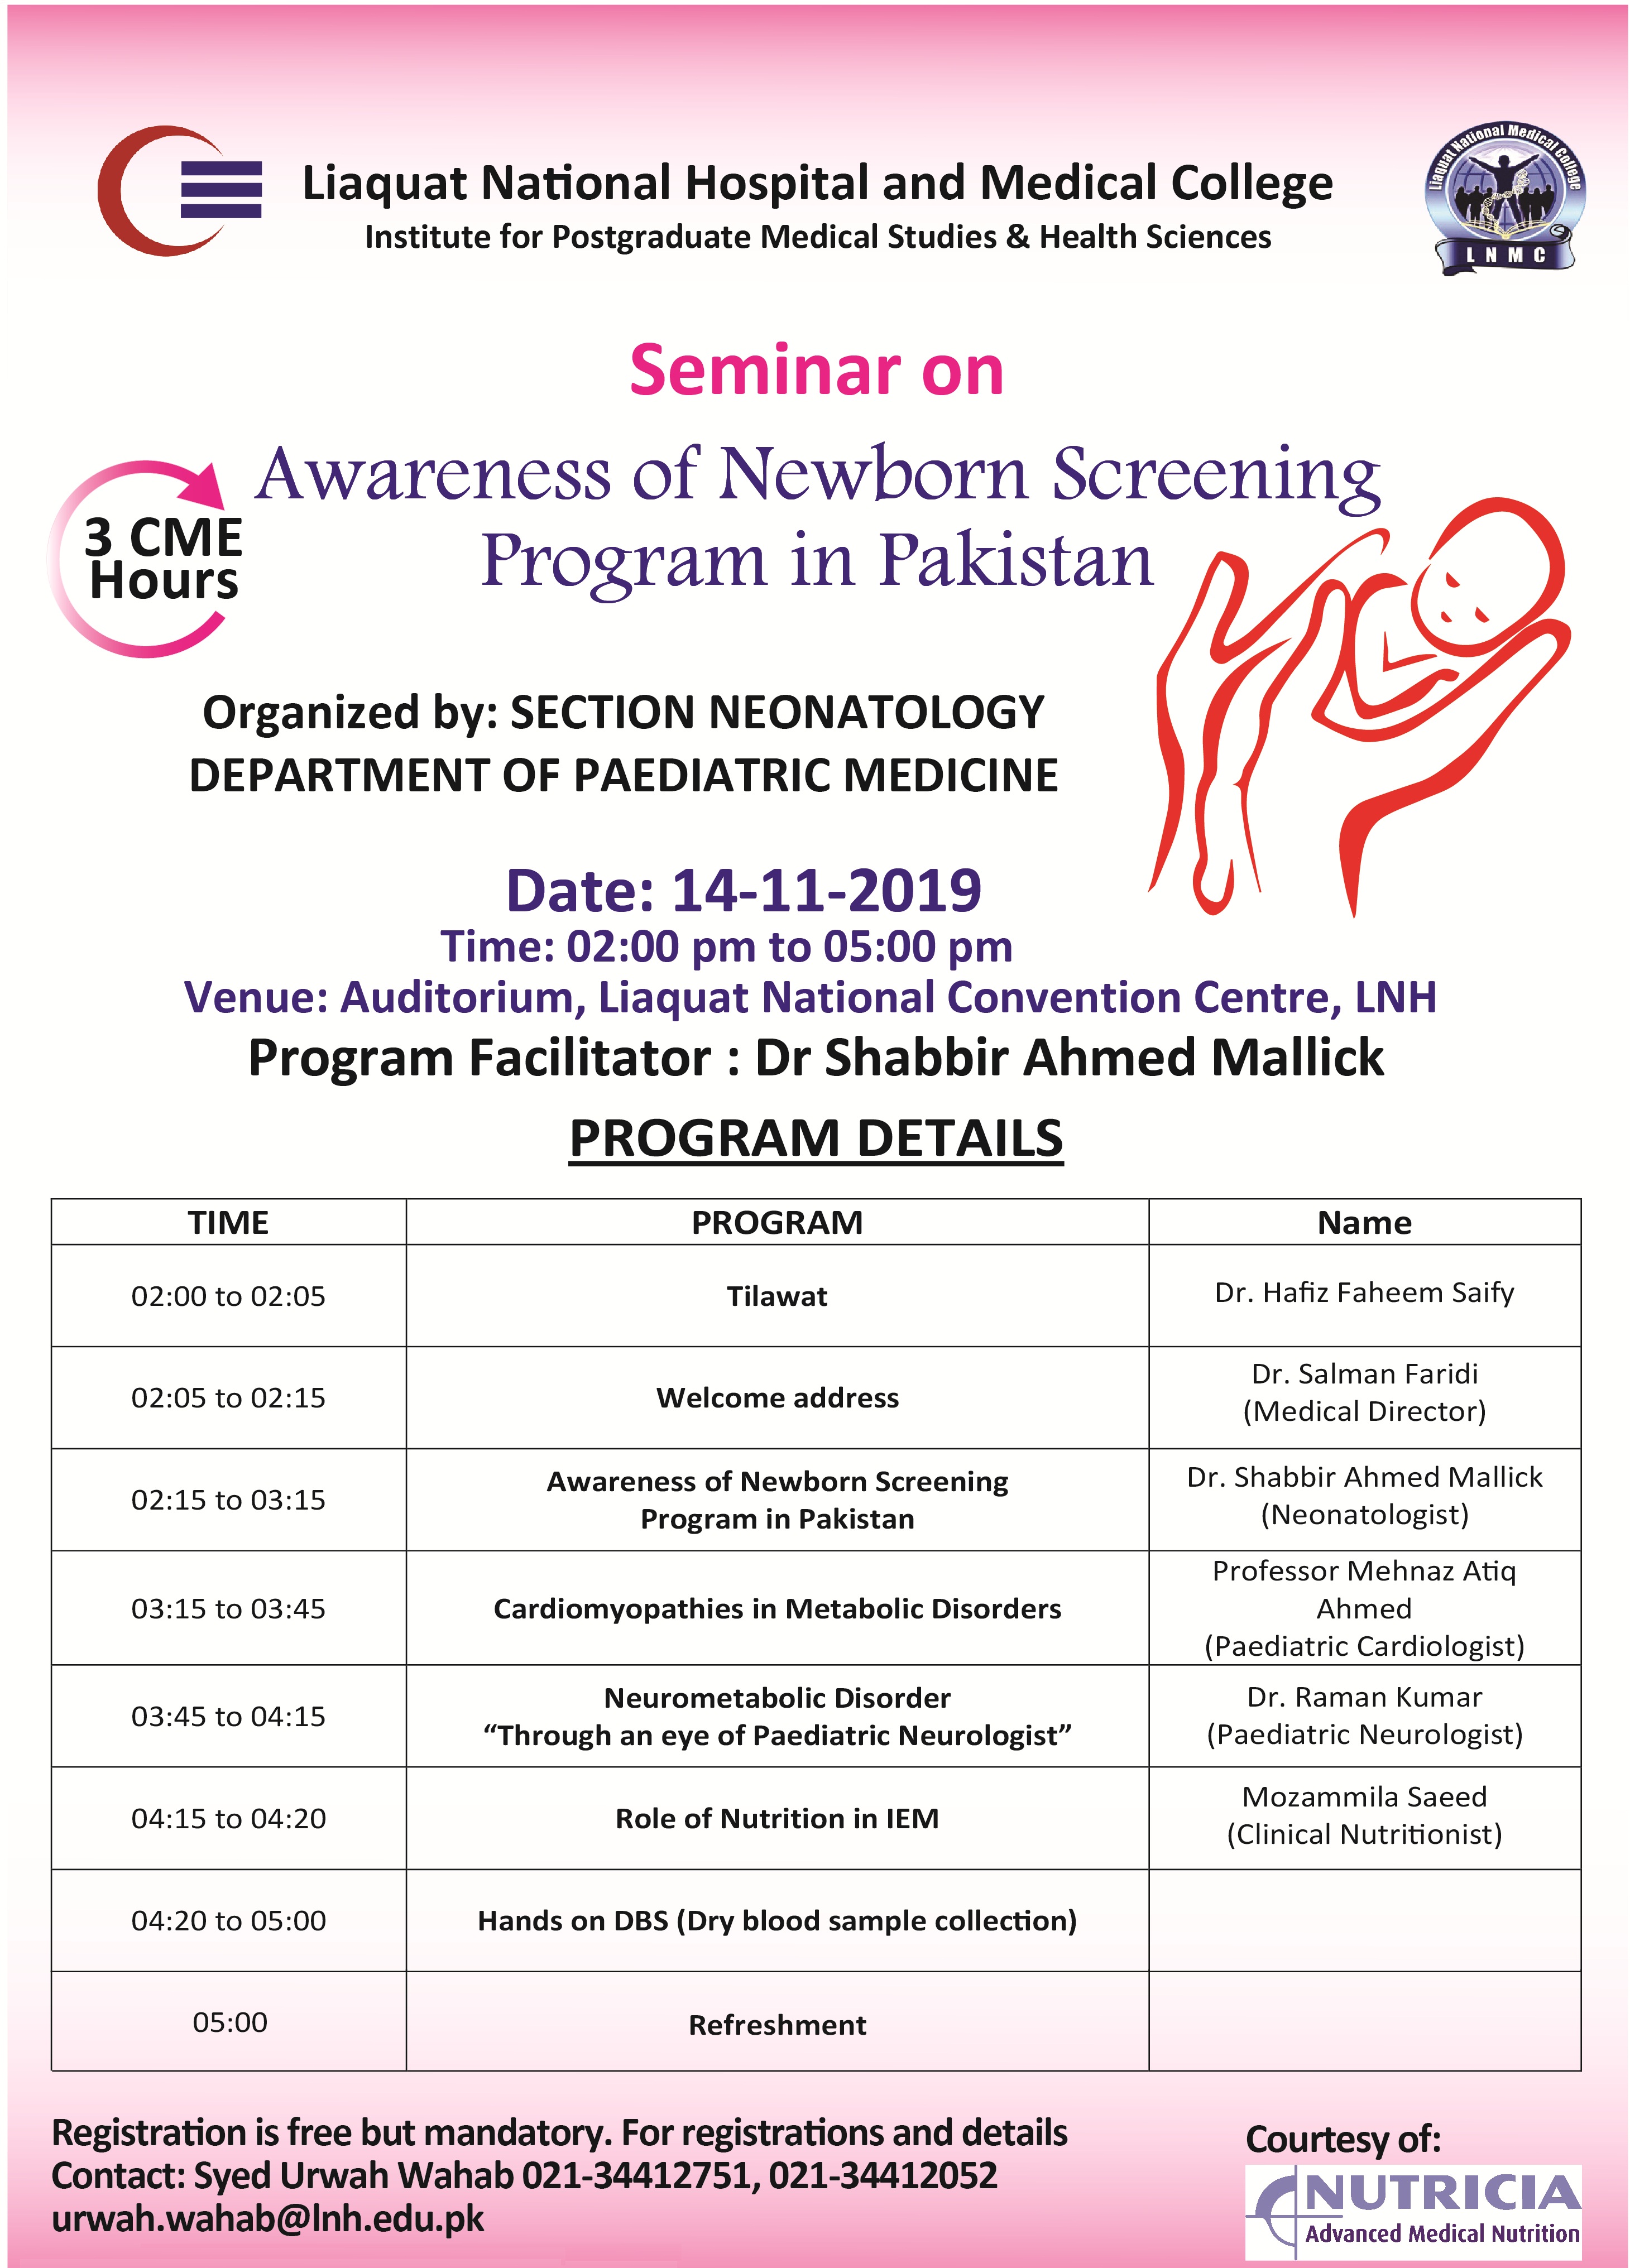 Seminar on Awareness of New Born Screening Program in Pakistan